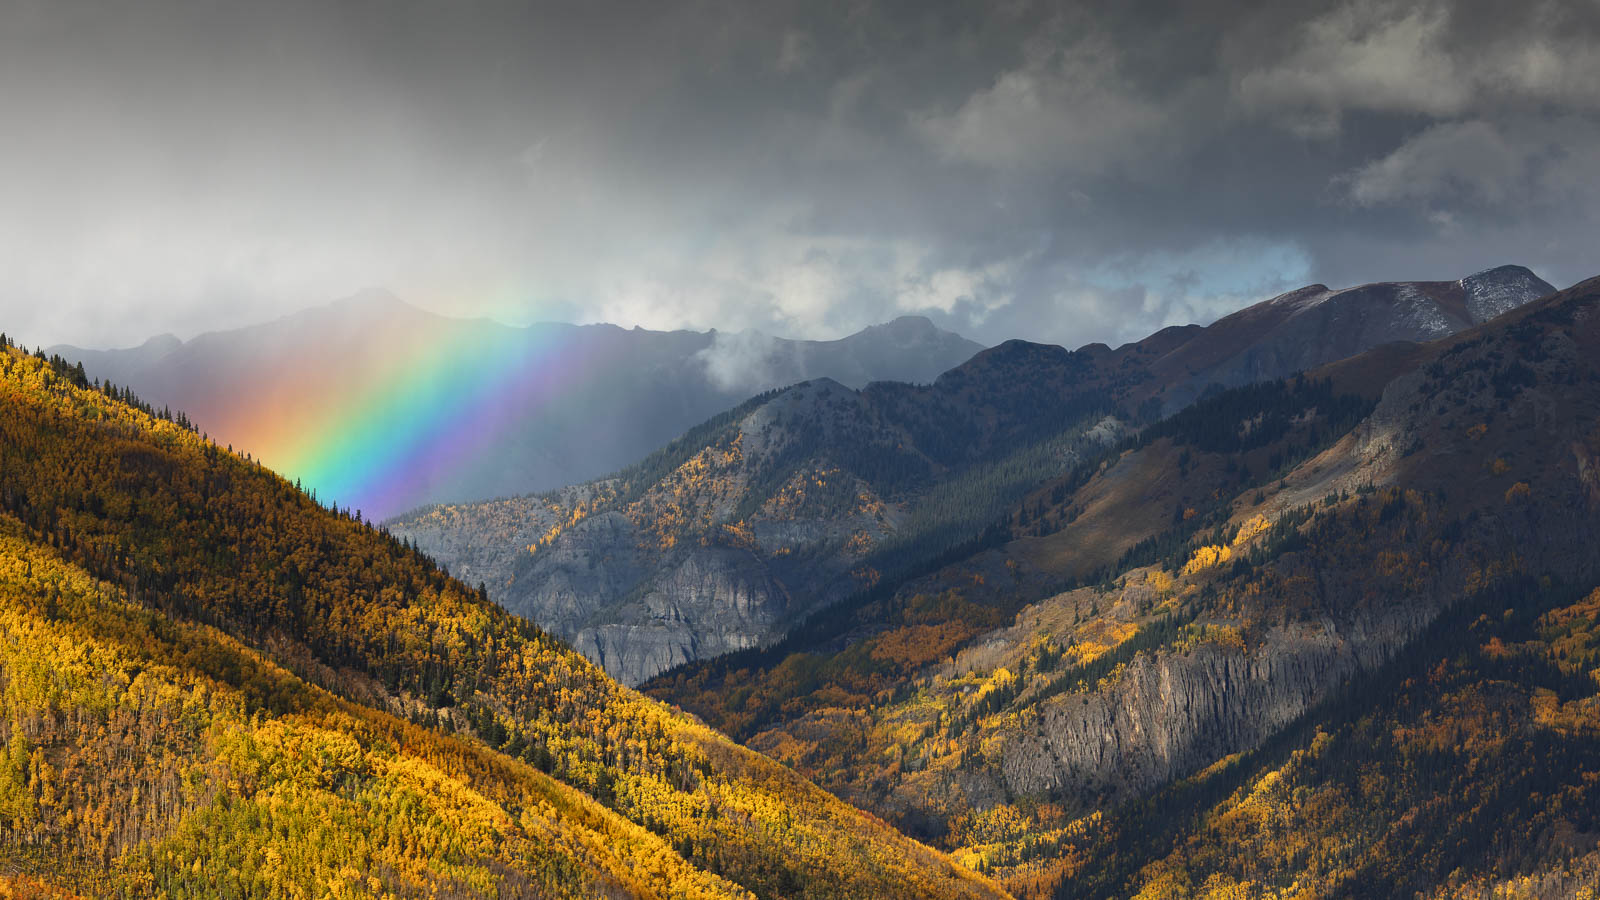 aspen, autumn, blue, colorado, fall, landscape orientation, rainbow, red mountain pass, san juan mountains, storm, tree, yellow...